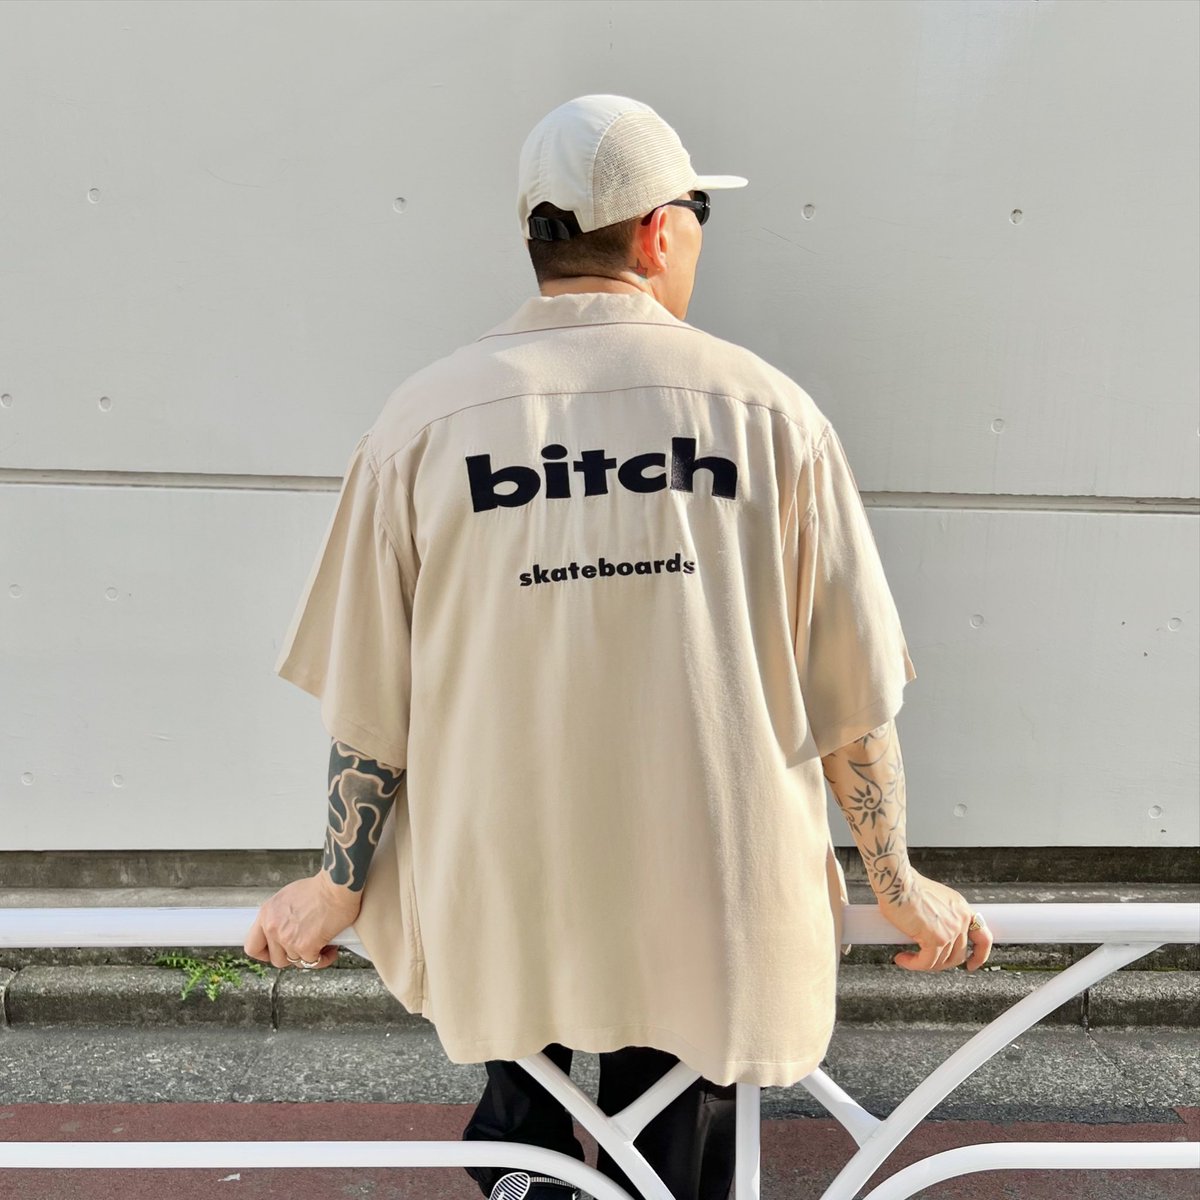 New Arrival

90’s 'bitch skateboards' big logo embroidery tan rayon s/s shirt 

#bitchskateboards
#birthdeathmens
#birthdeath
#vintage
#shibuya